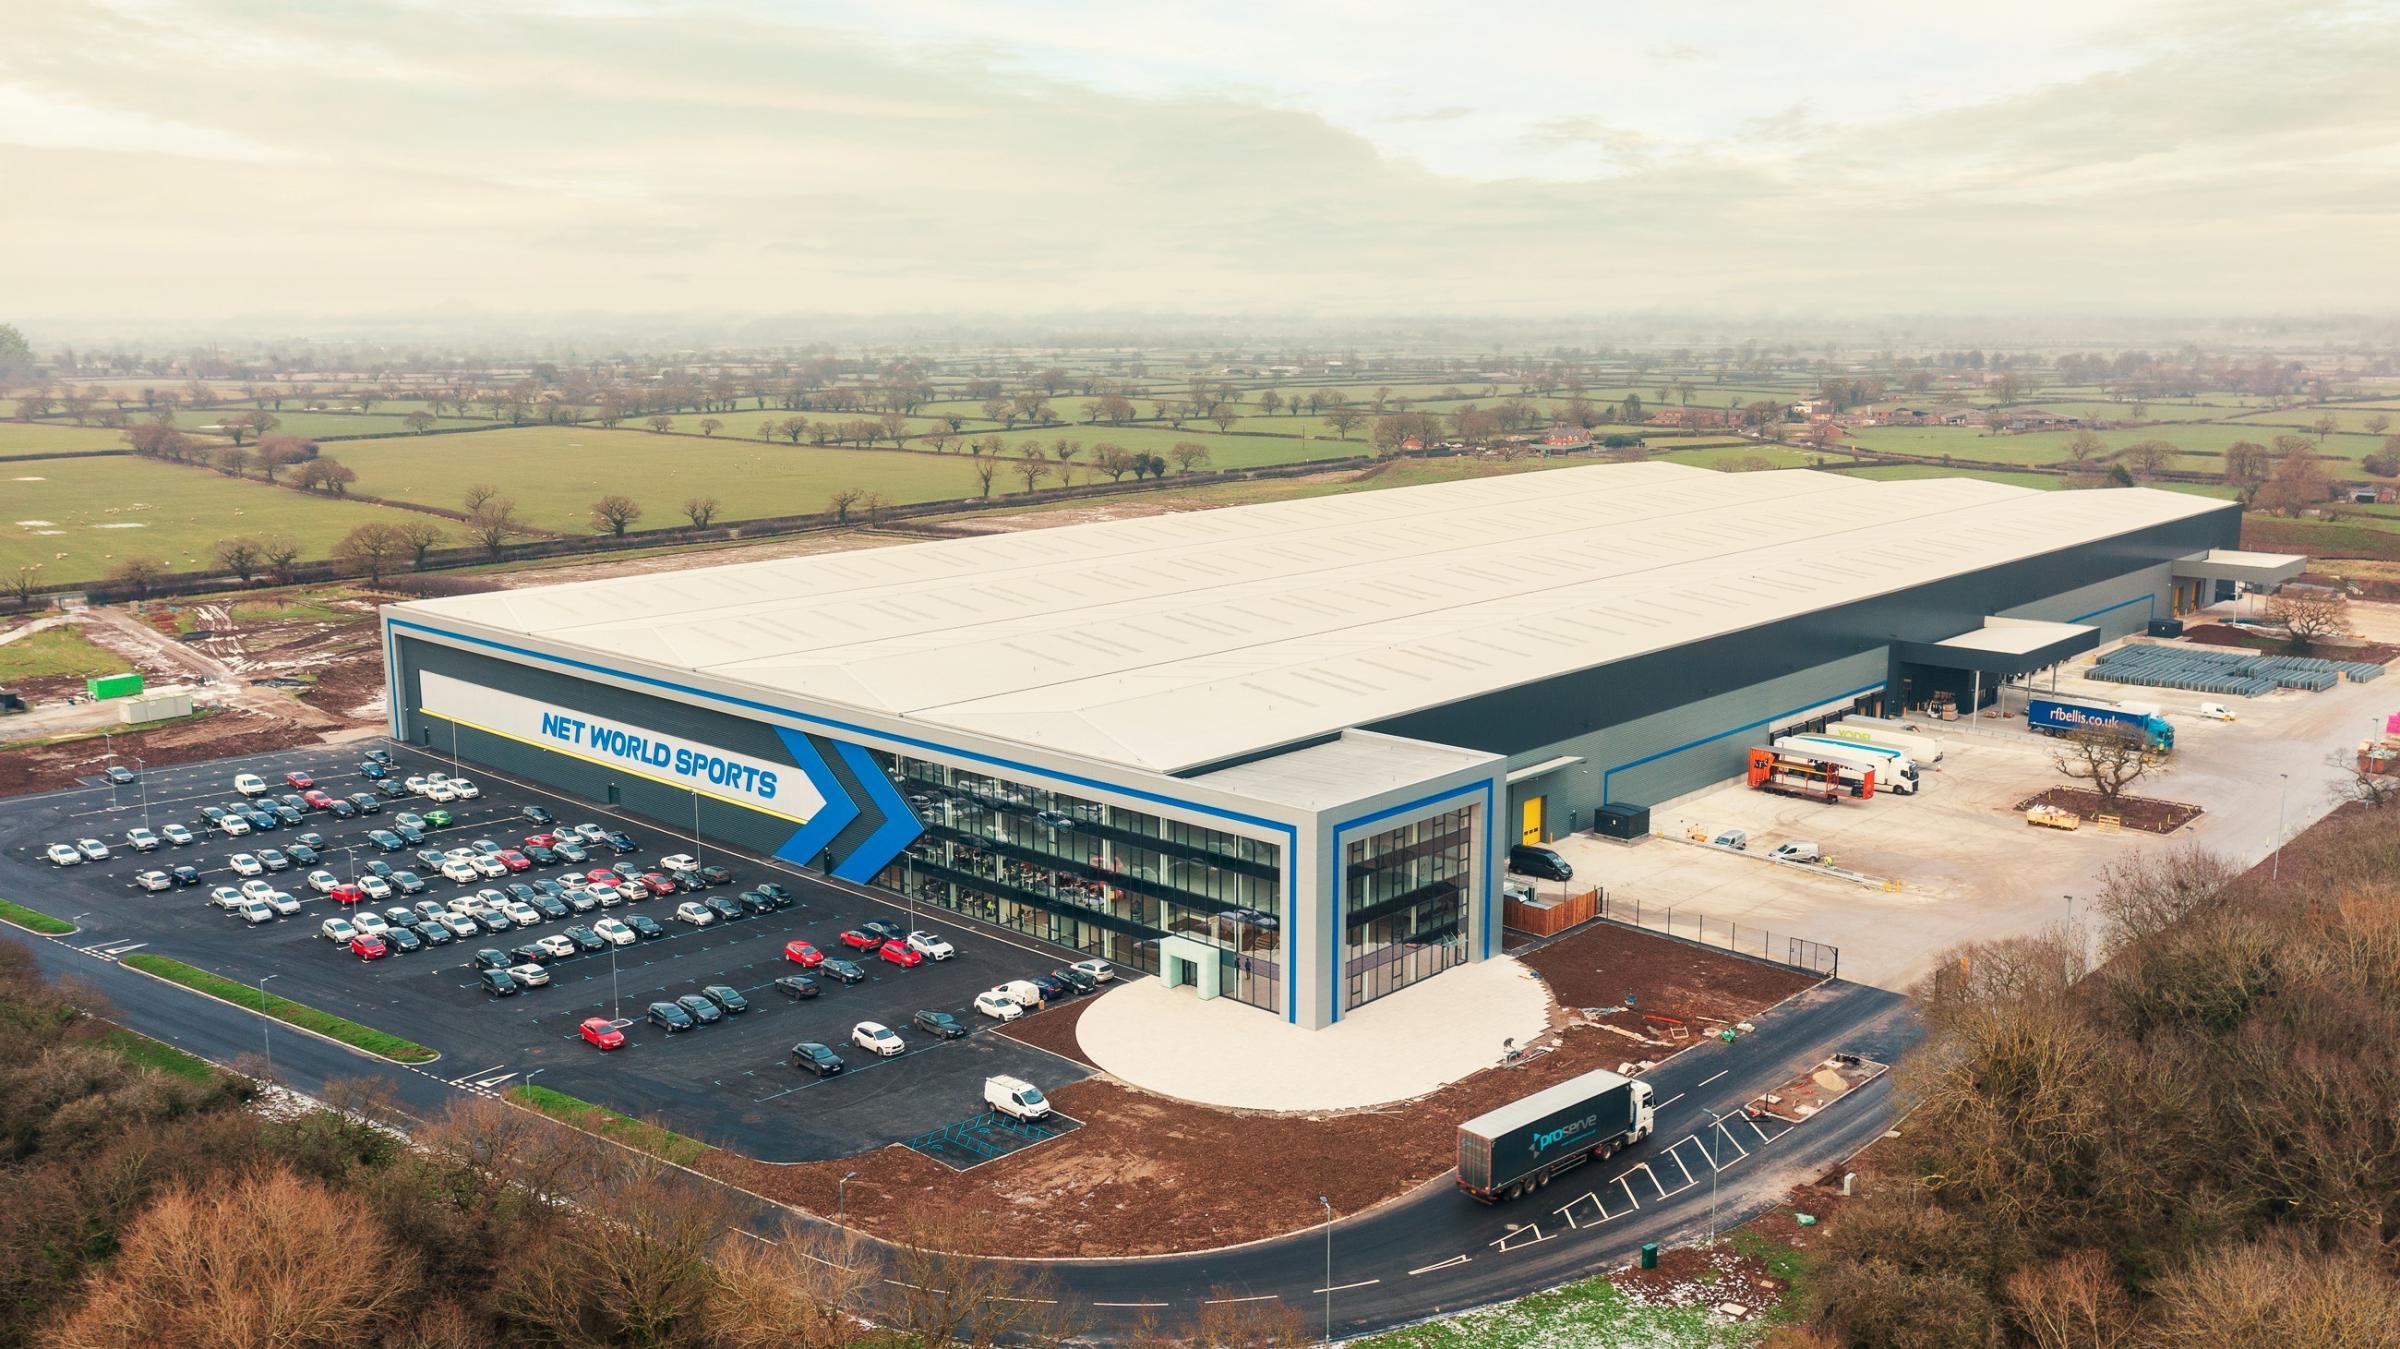 The new Net World Sports warehouse in Wrexham.